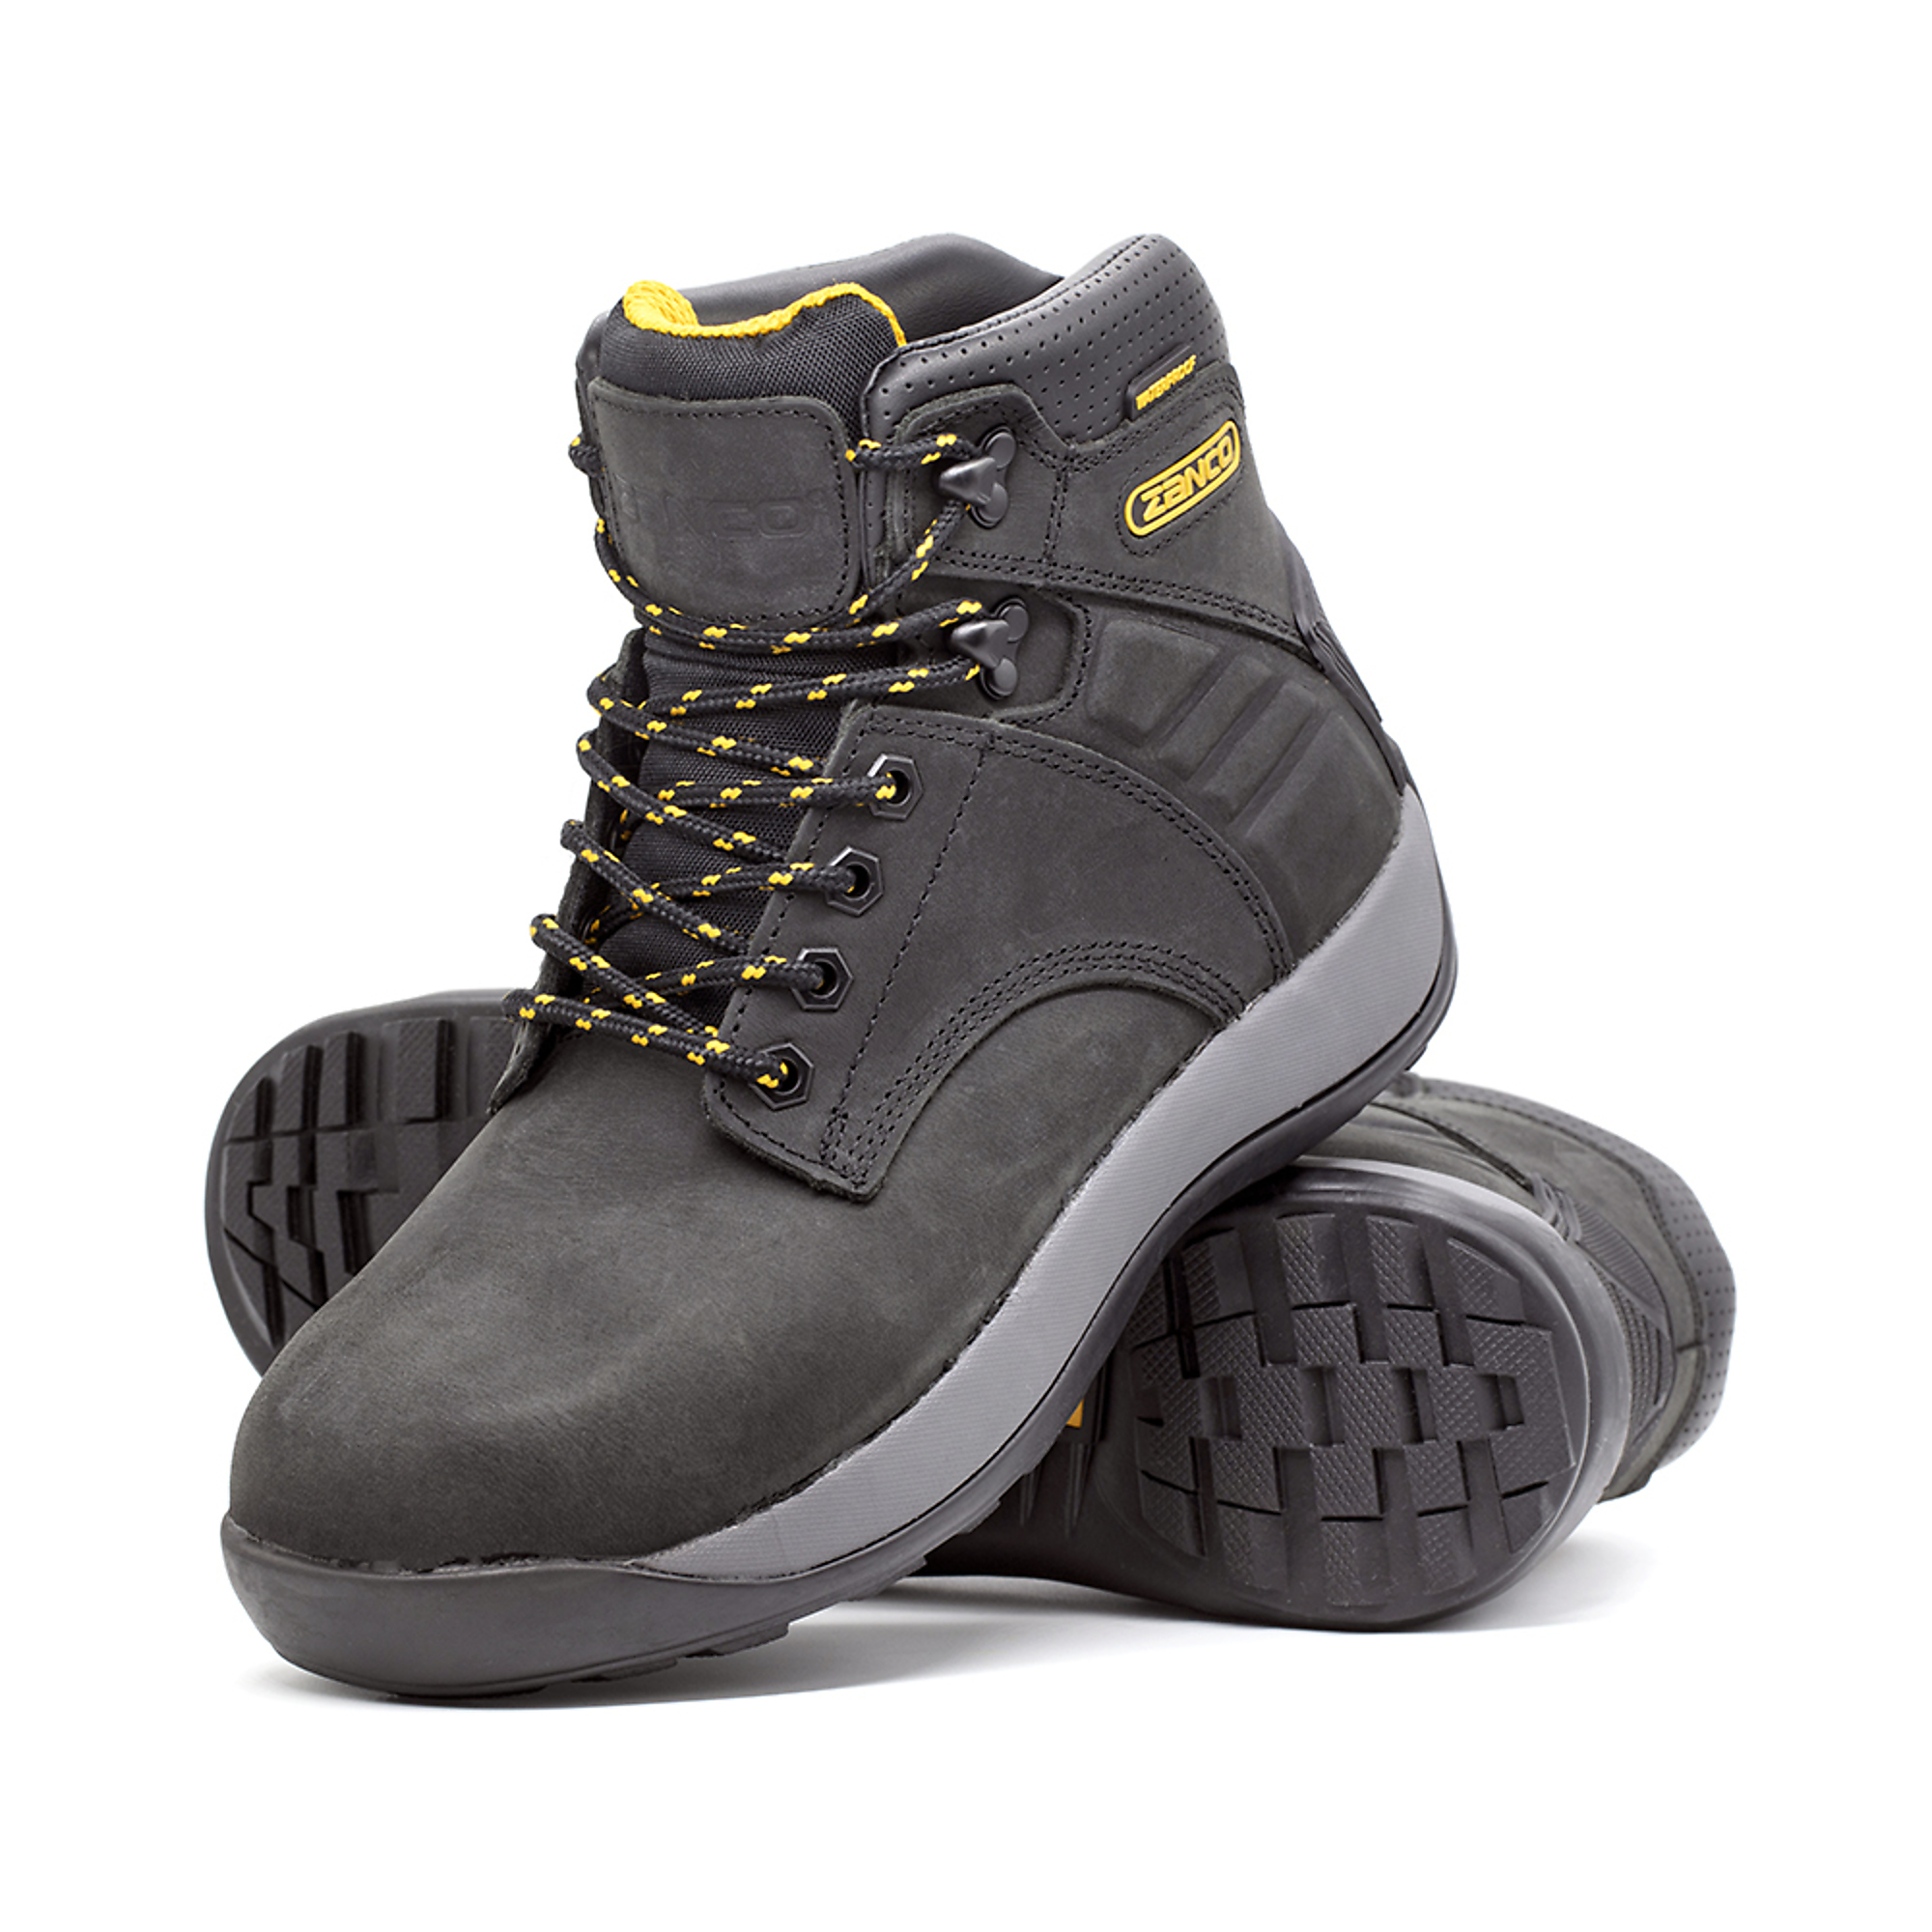 Zanco, Men's Waterproof,Steel toe,EH,Safety boots, Size 8, Width Medium, Color BLACK, Model 8236-01-8